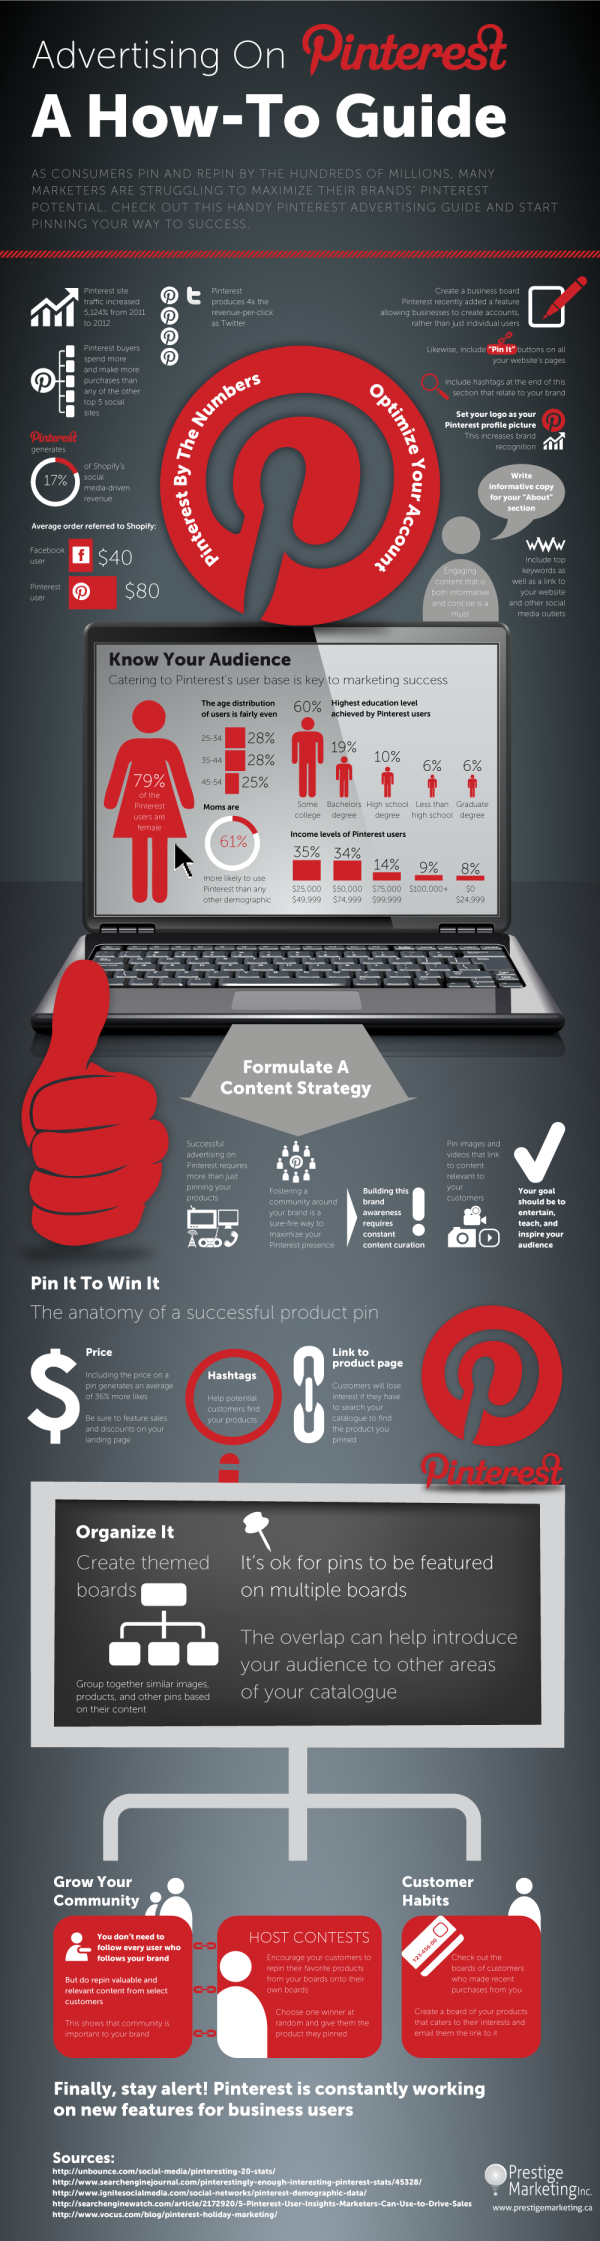 Pinterest Marketing Infographic